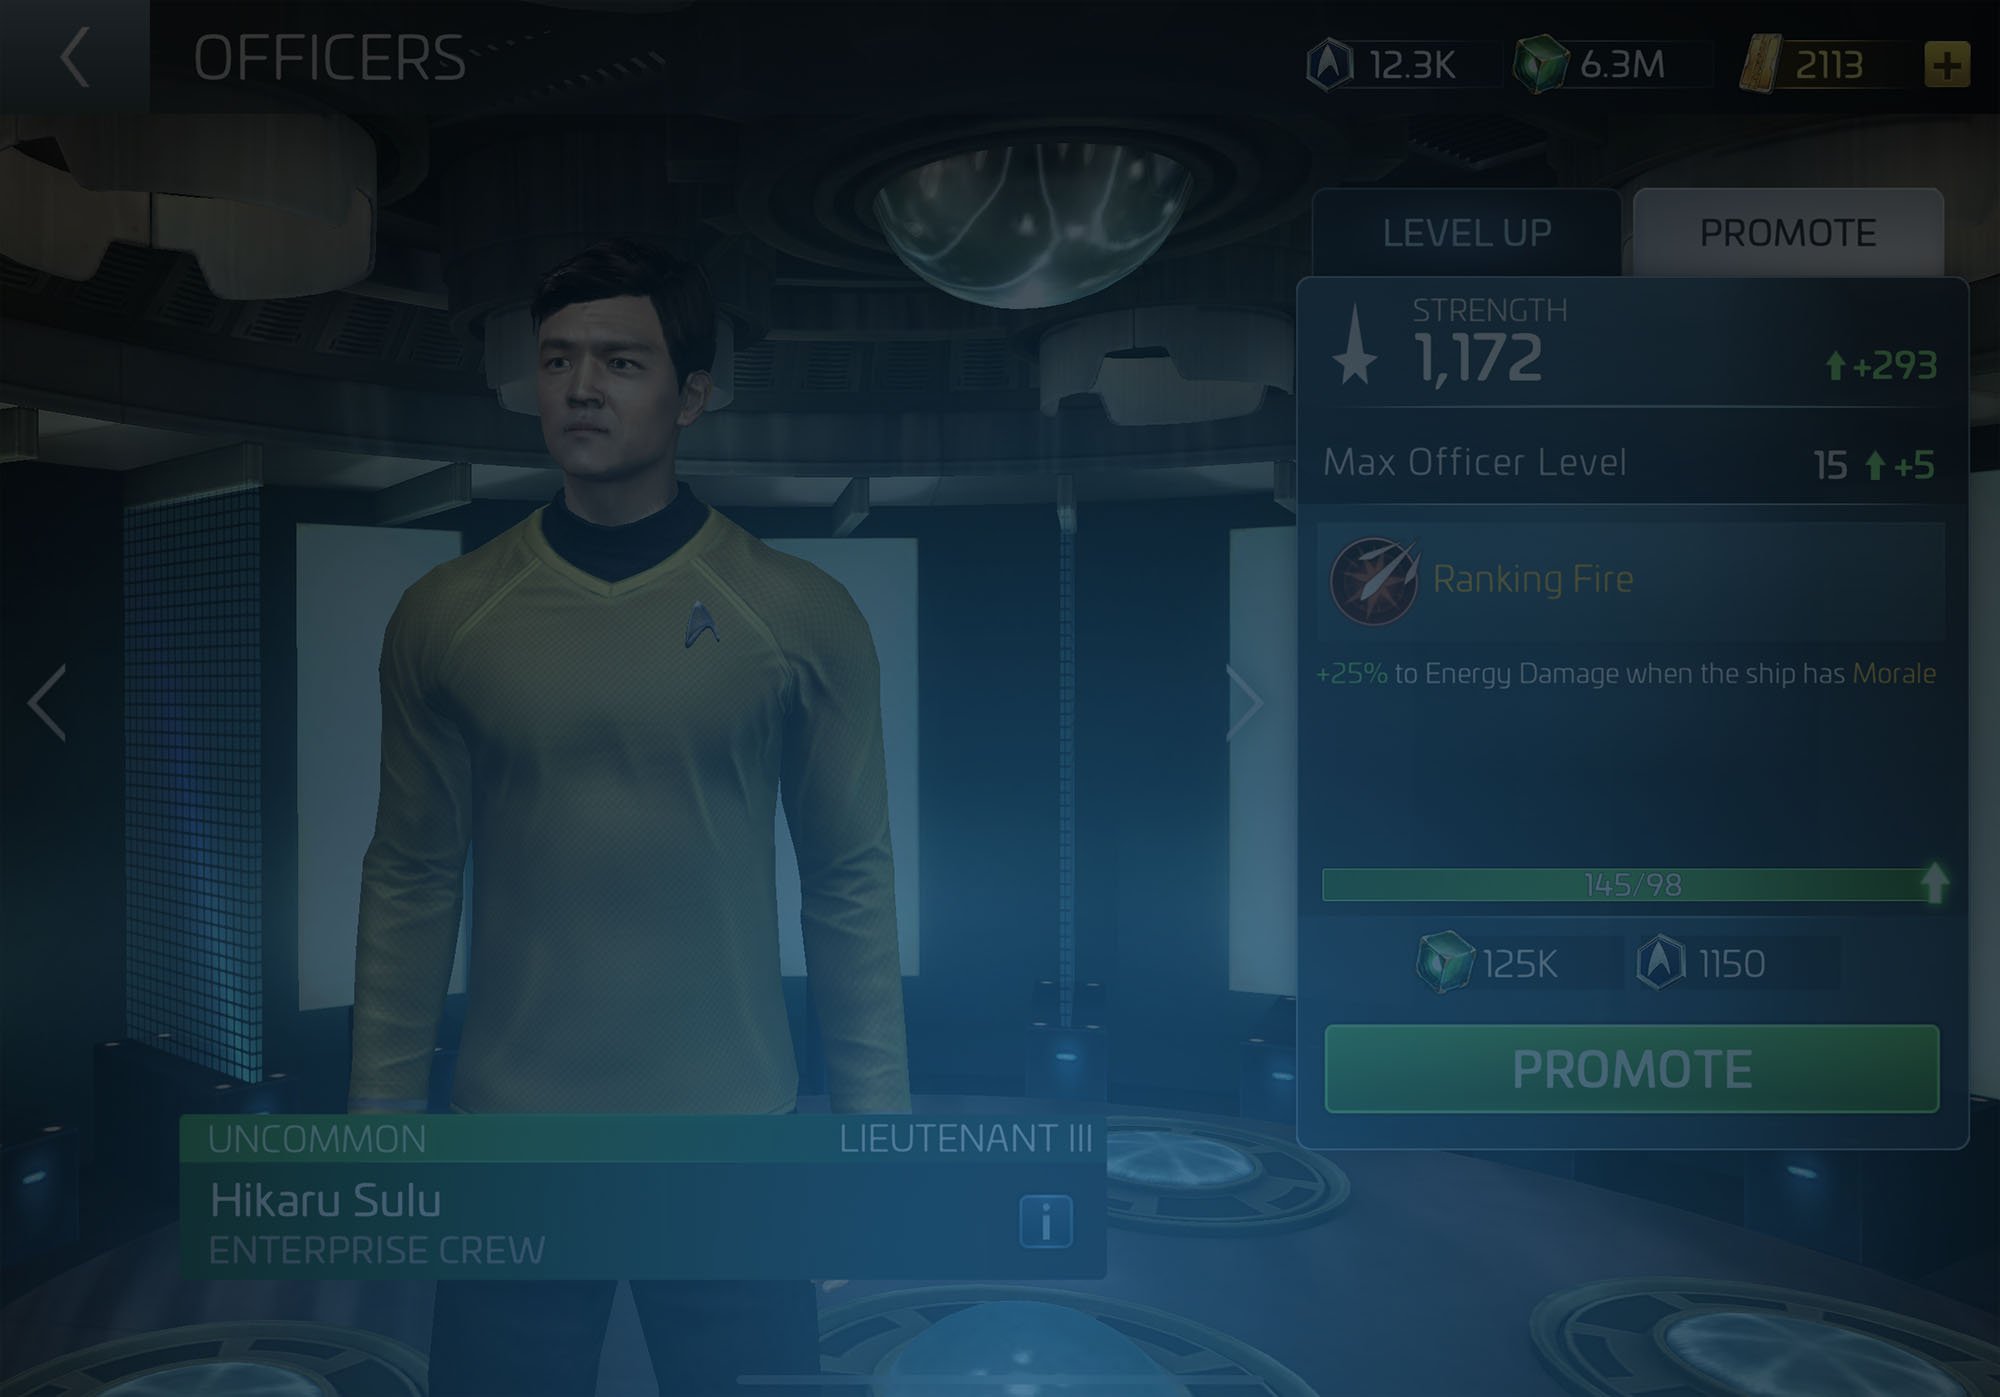 Officer Hikaru Sulu